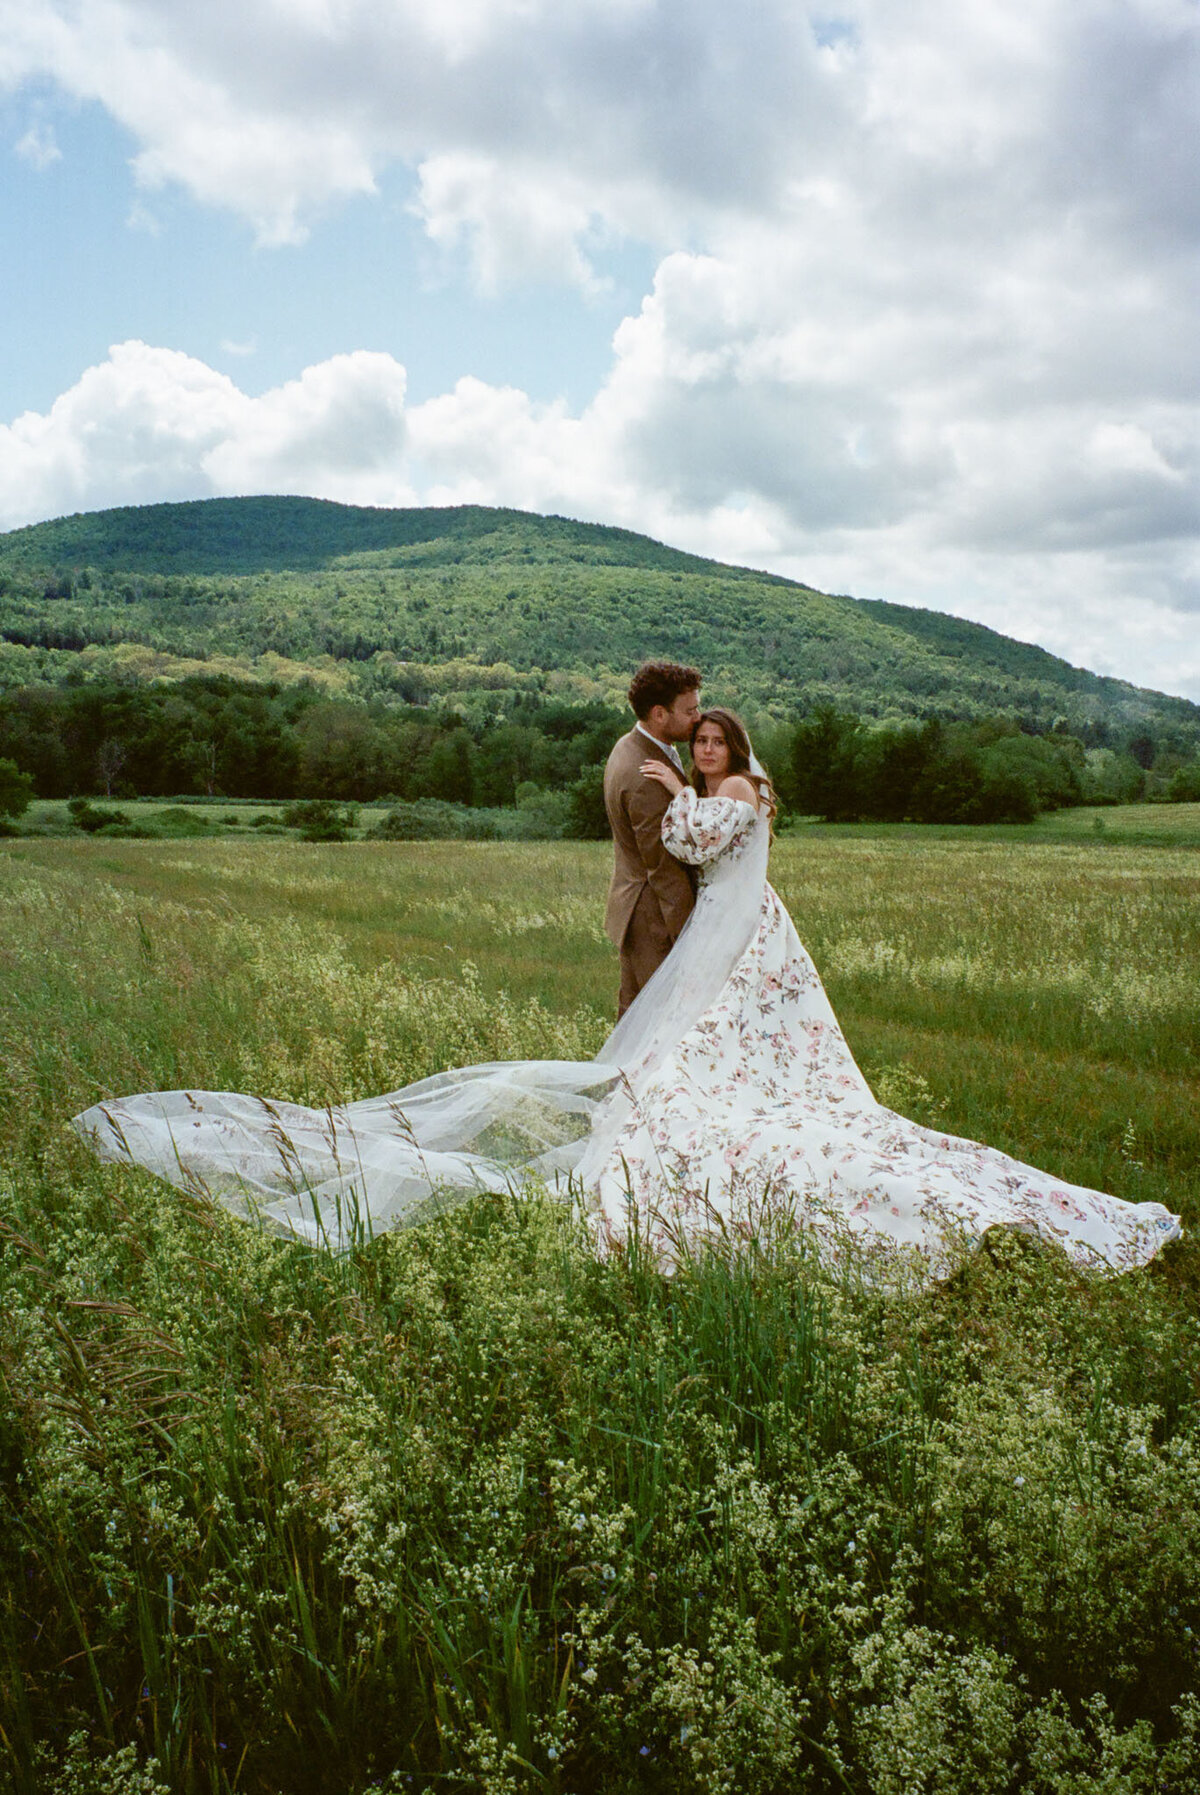 adventure wedding photos in a field